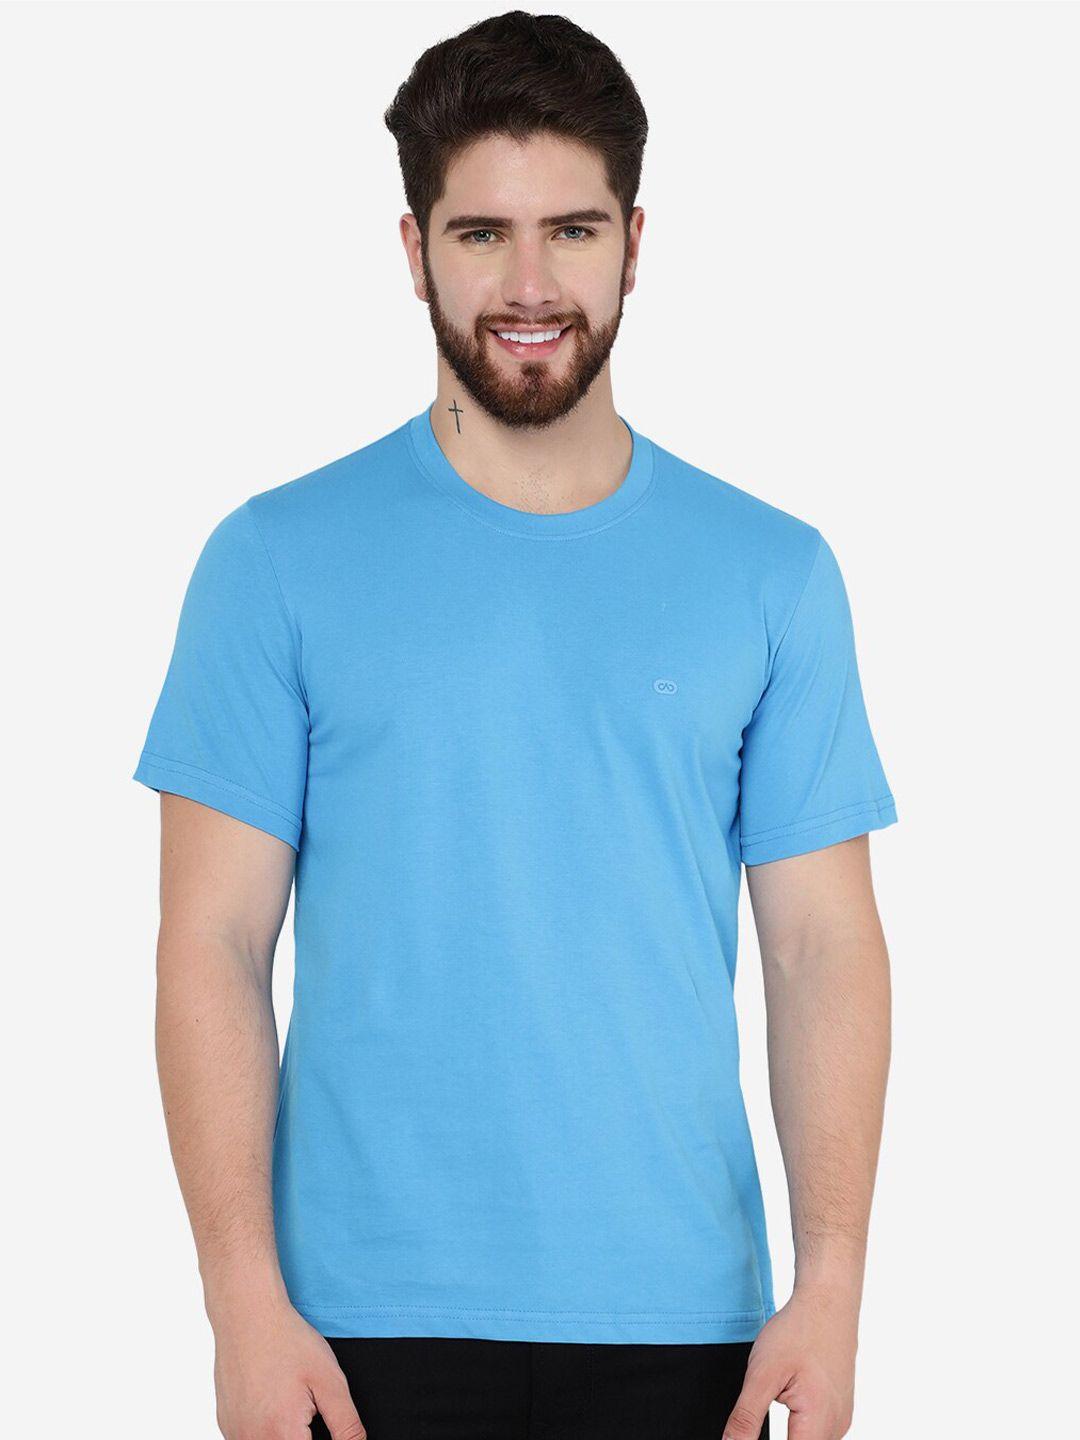 jade blue round neck pure cotton slim fit t-shirt